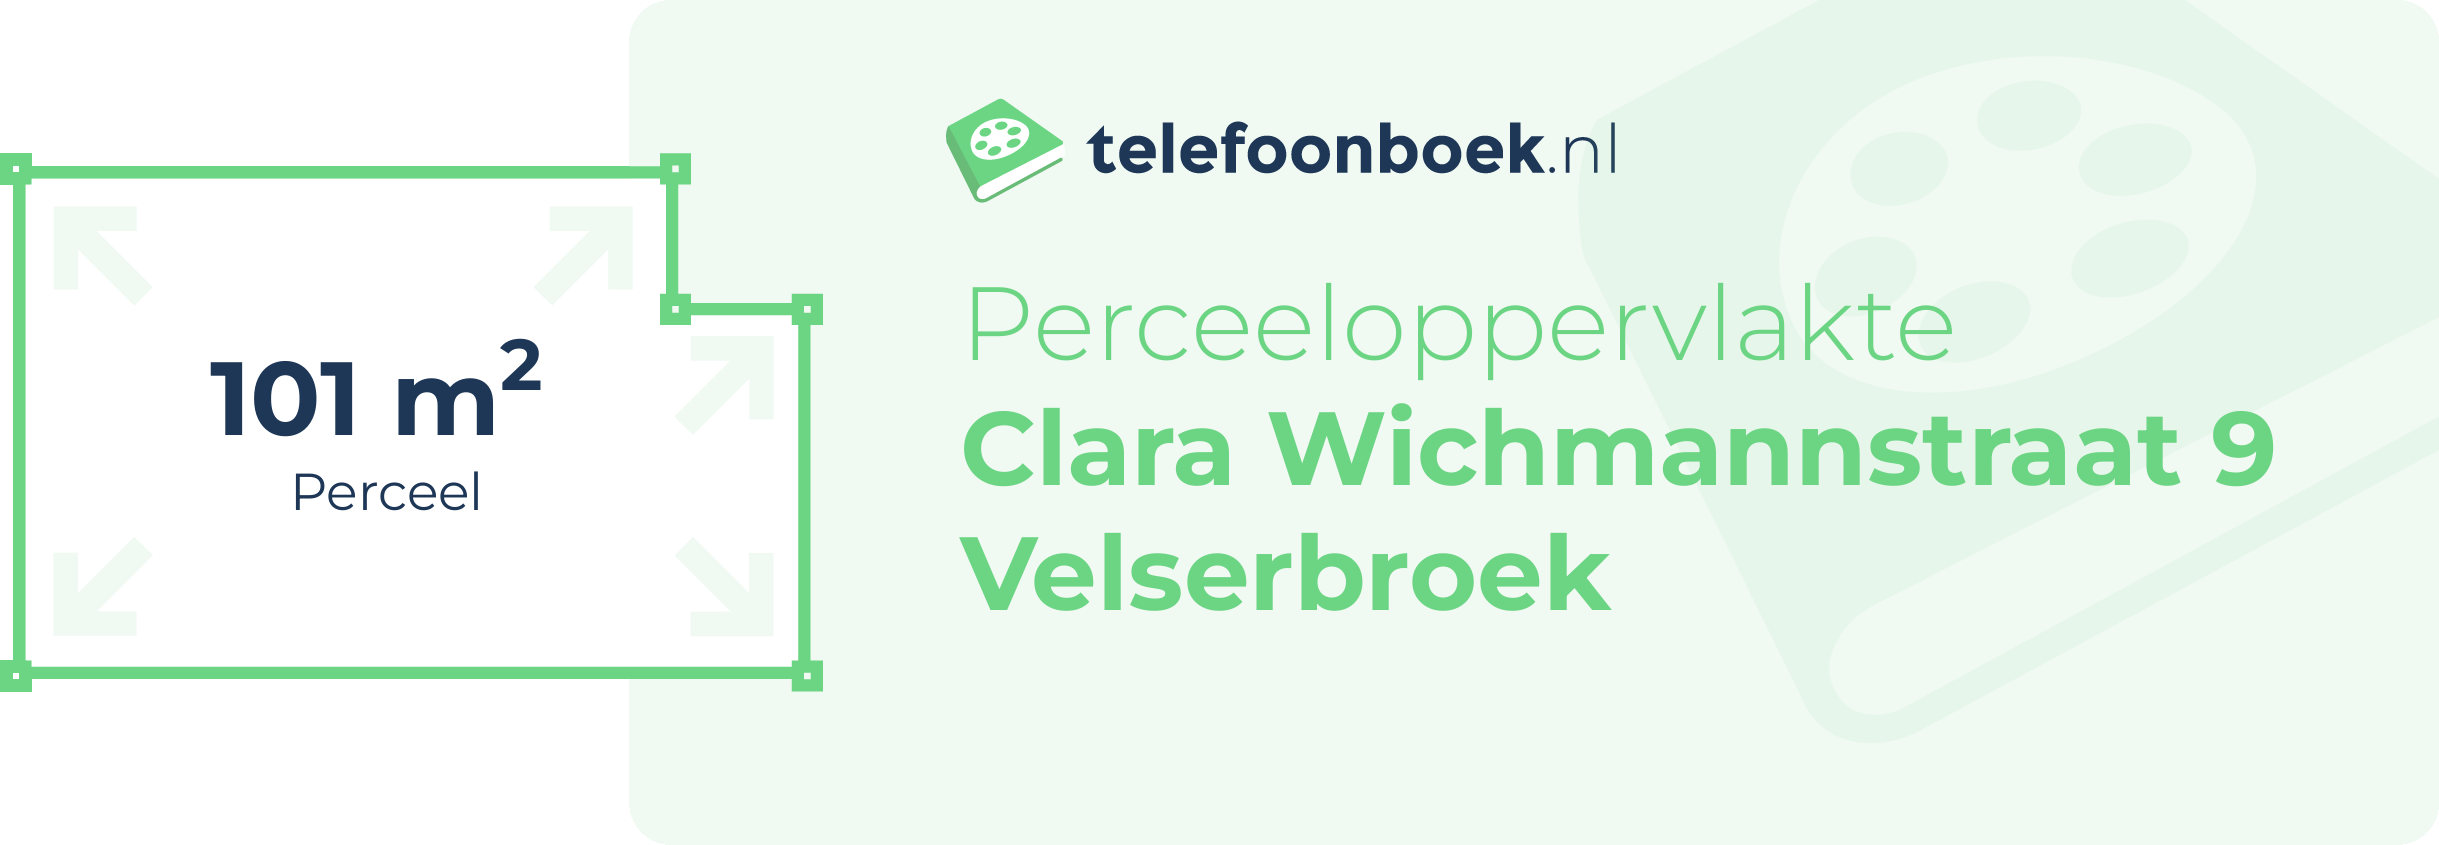 Perceeloppervlakte Clara Wichmannstraat 9 Velserbroek